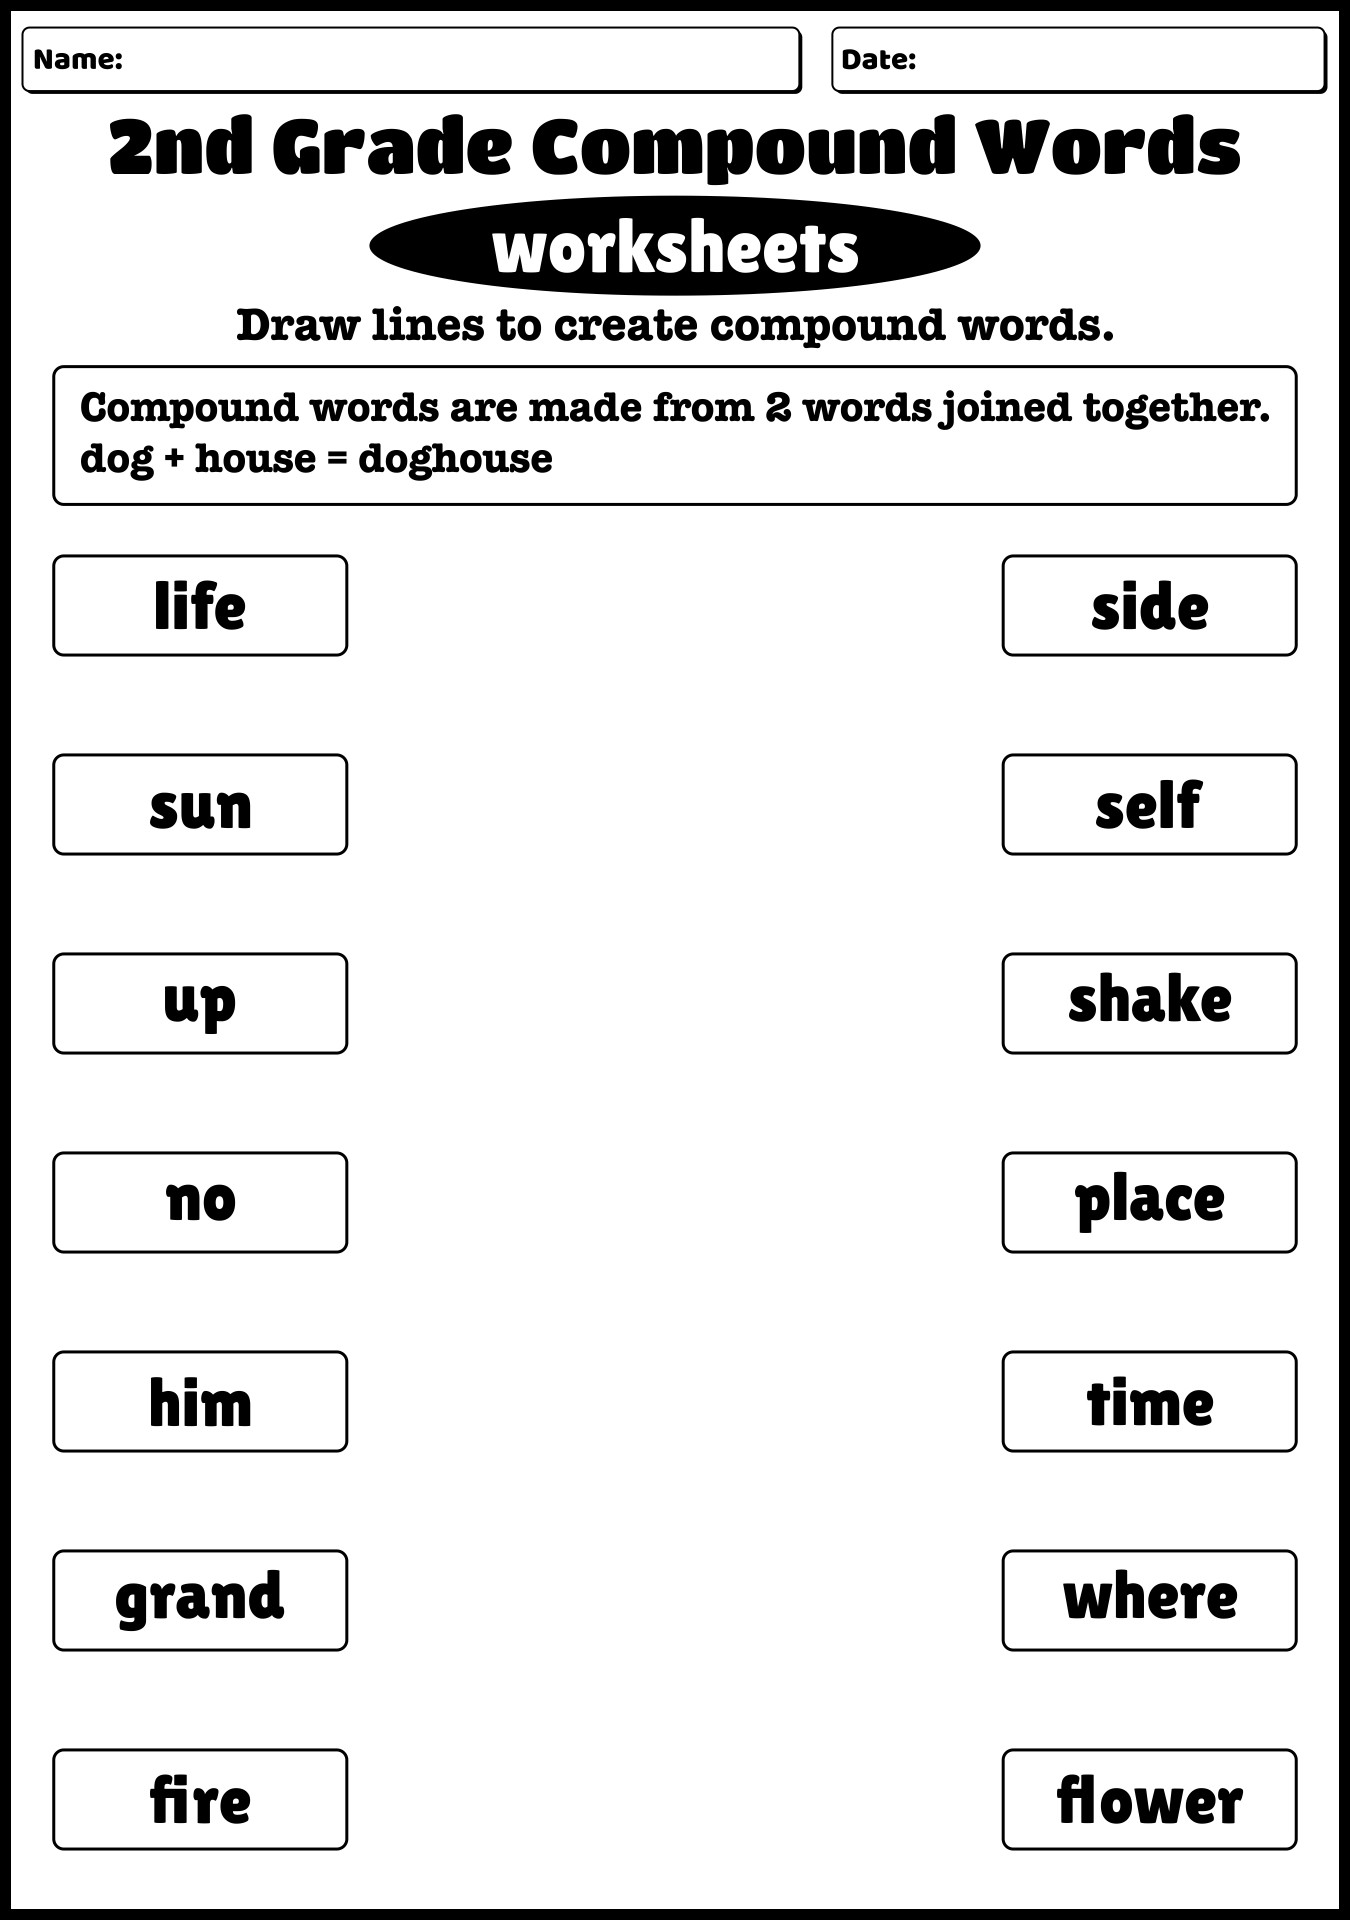 15-best-images-of-free-grammar-worksheets-compound-2nd-grade-compound-words-worksheets